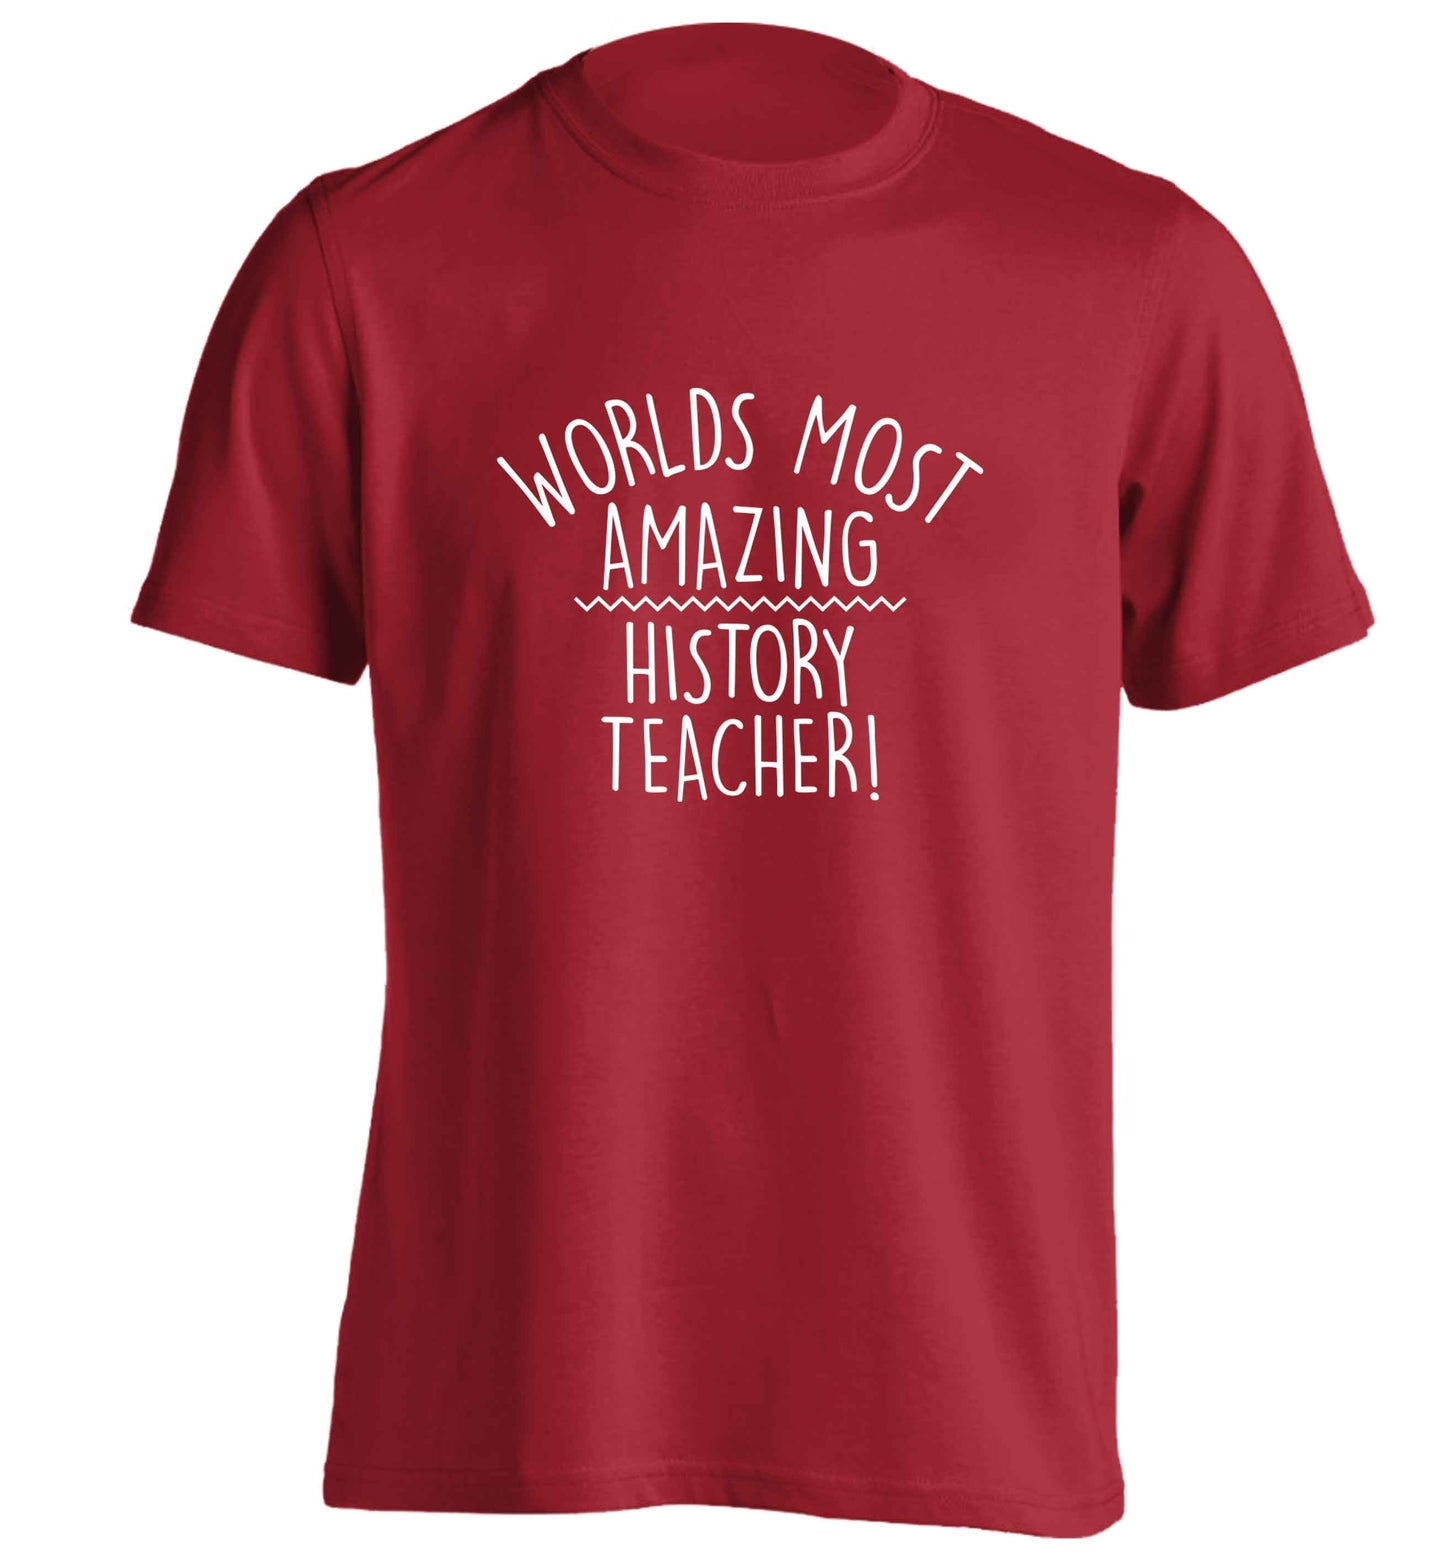 Worlds most amazing History teacher adults unisex red Tshirt 2XL